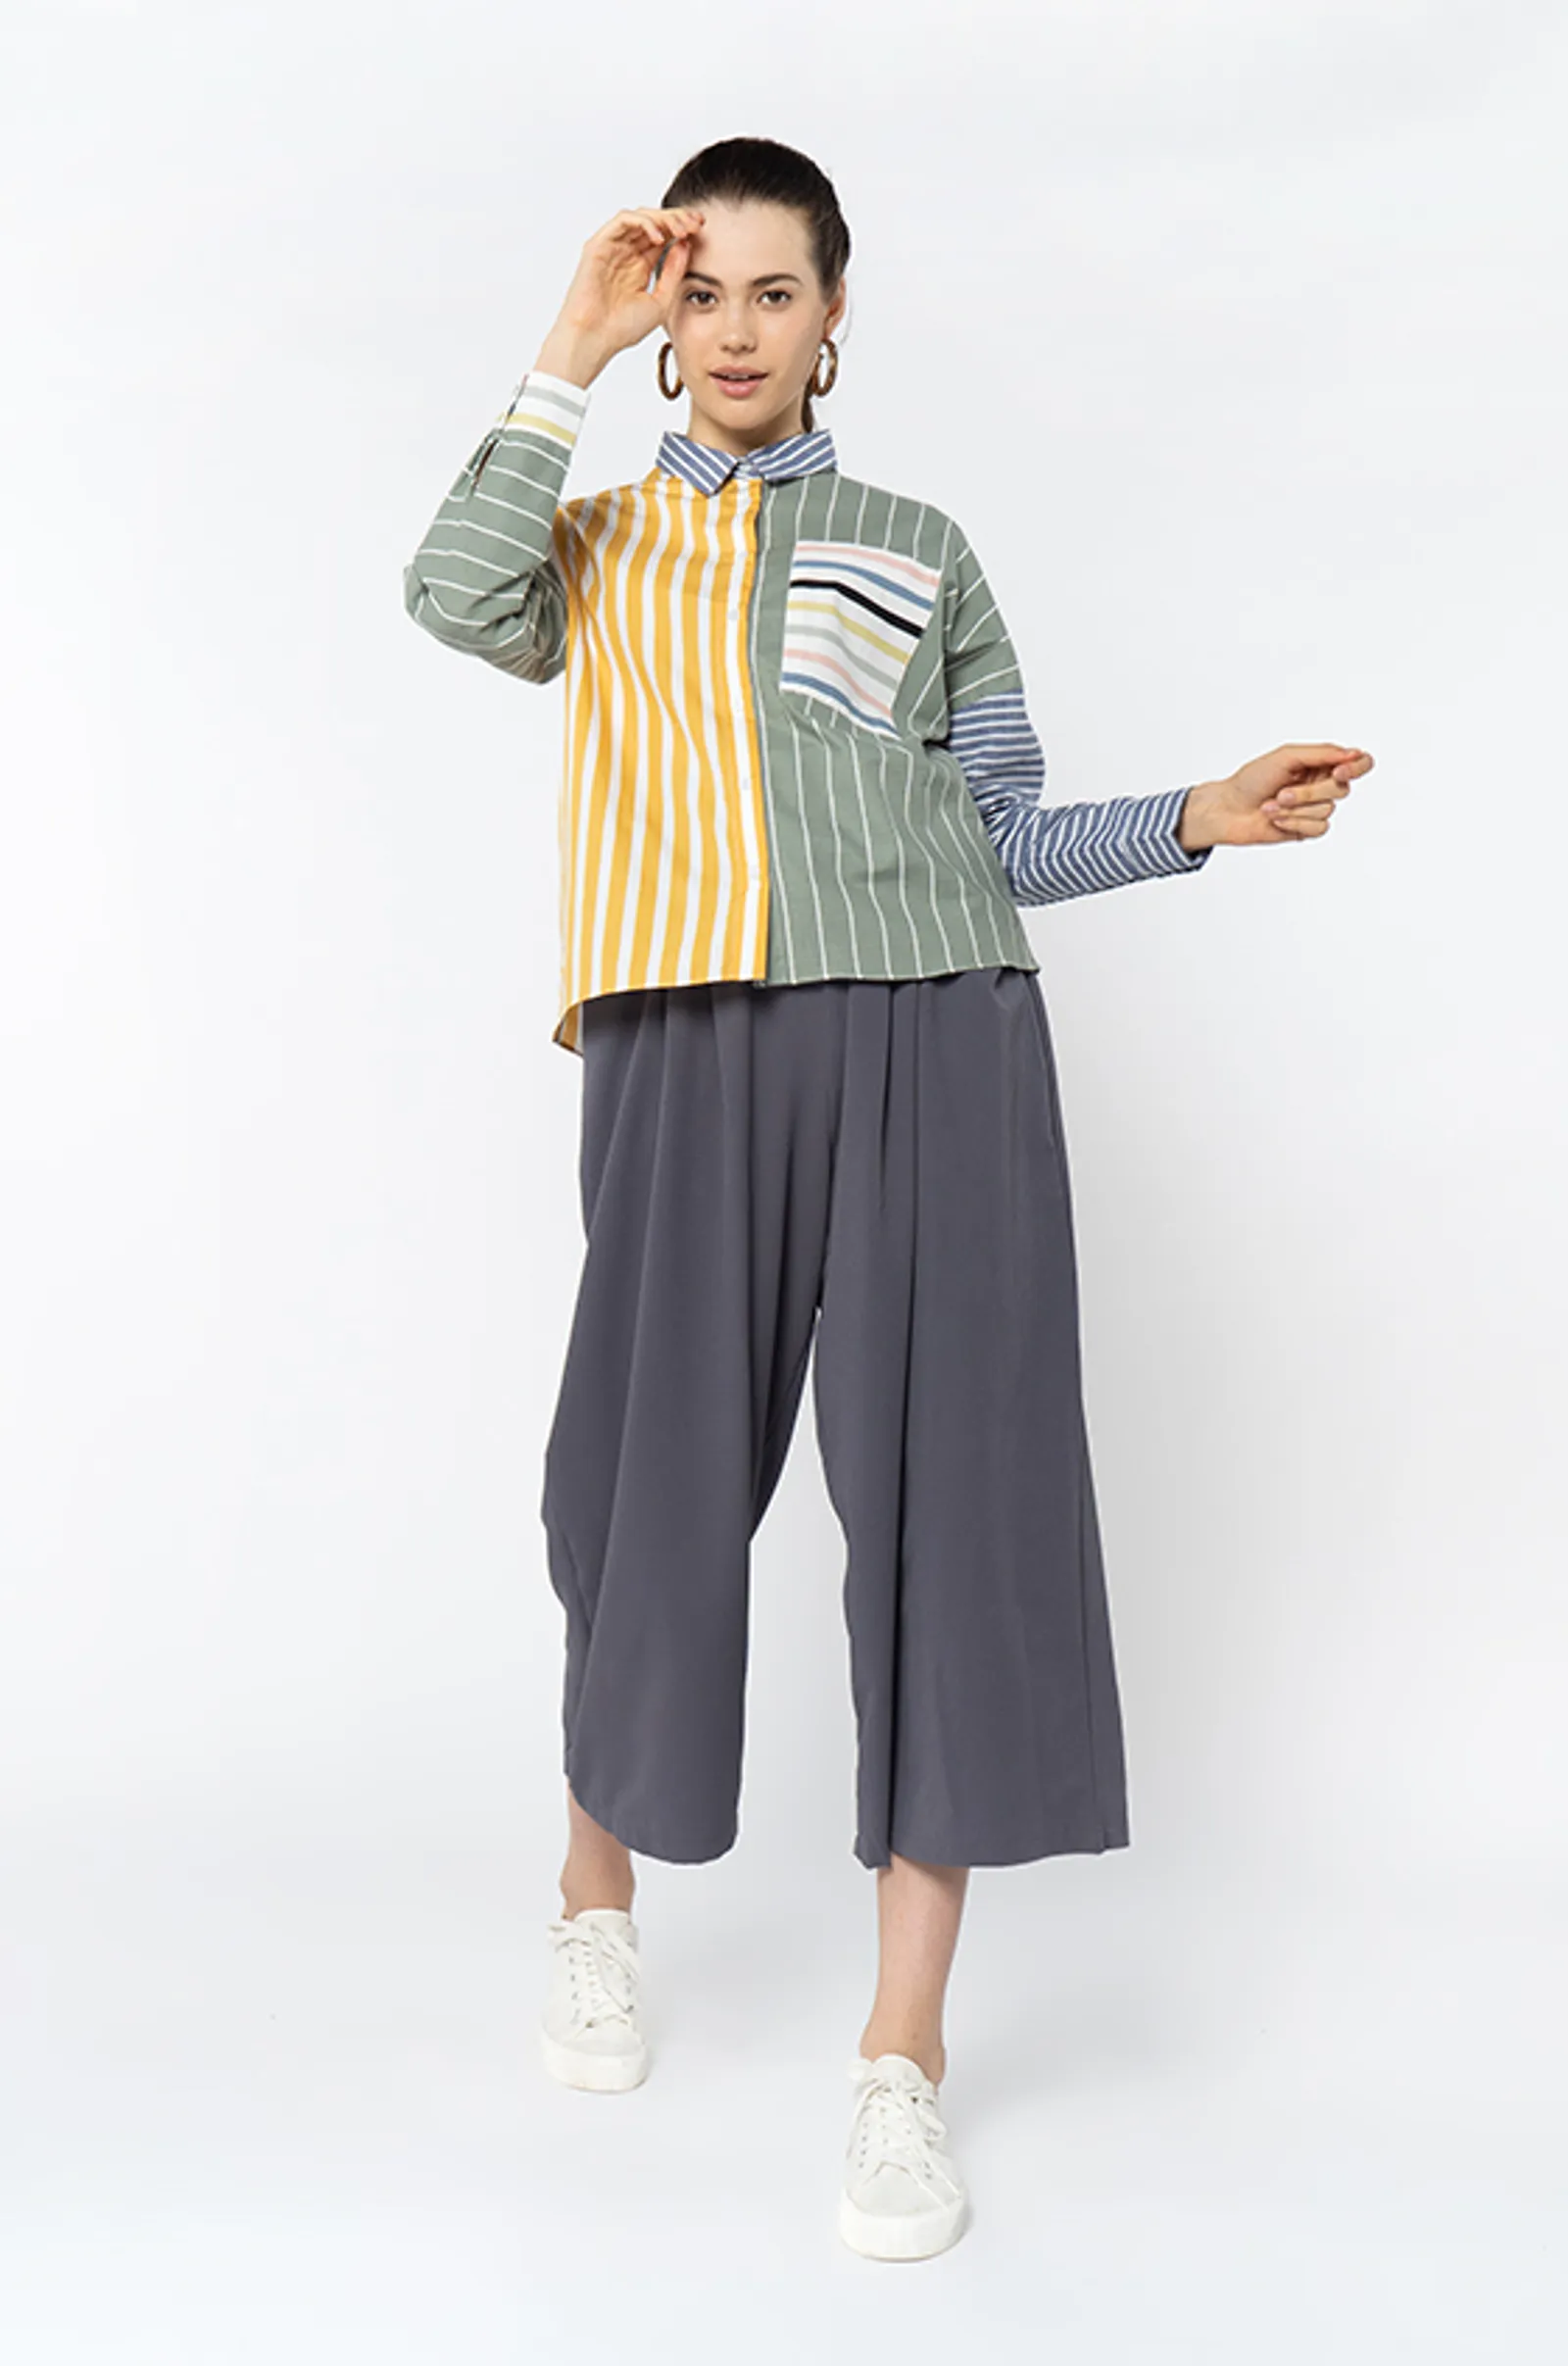 #PopbelaOOTD: Baju Garis-garis dari Brand Lokal